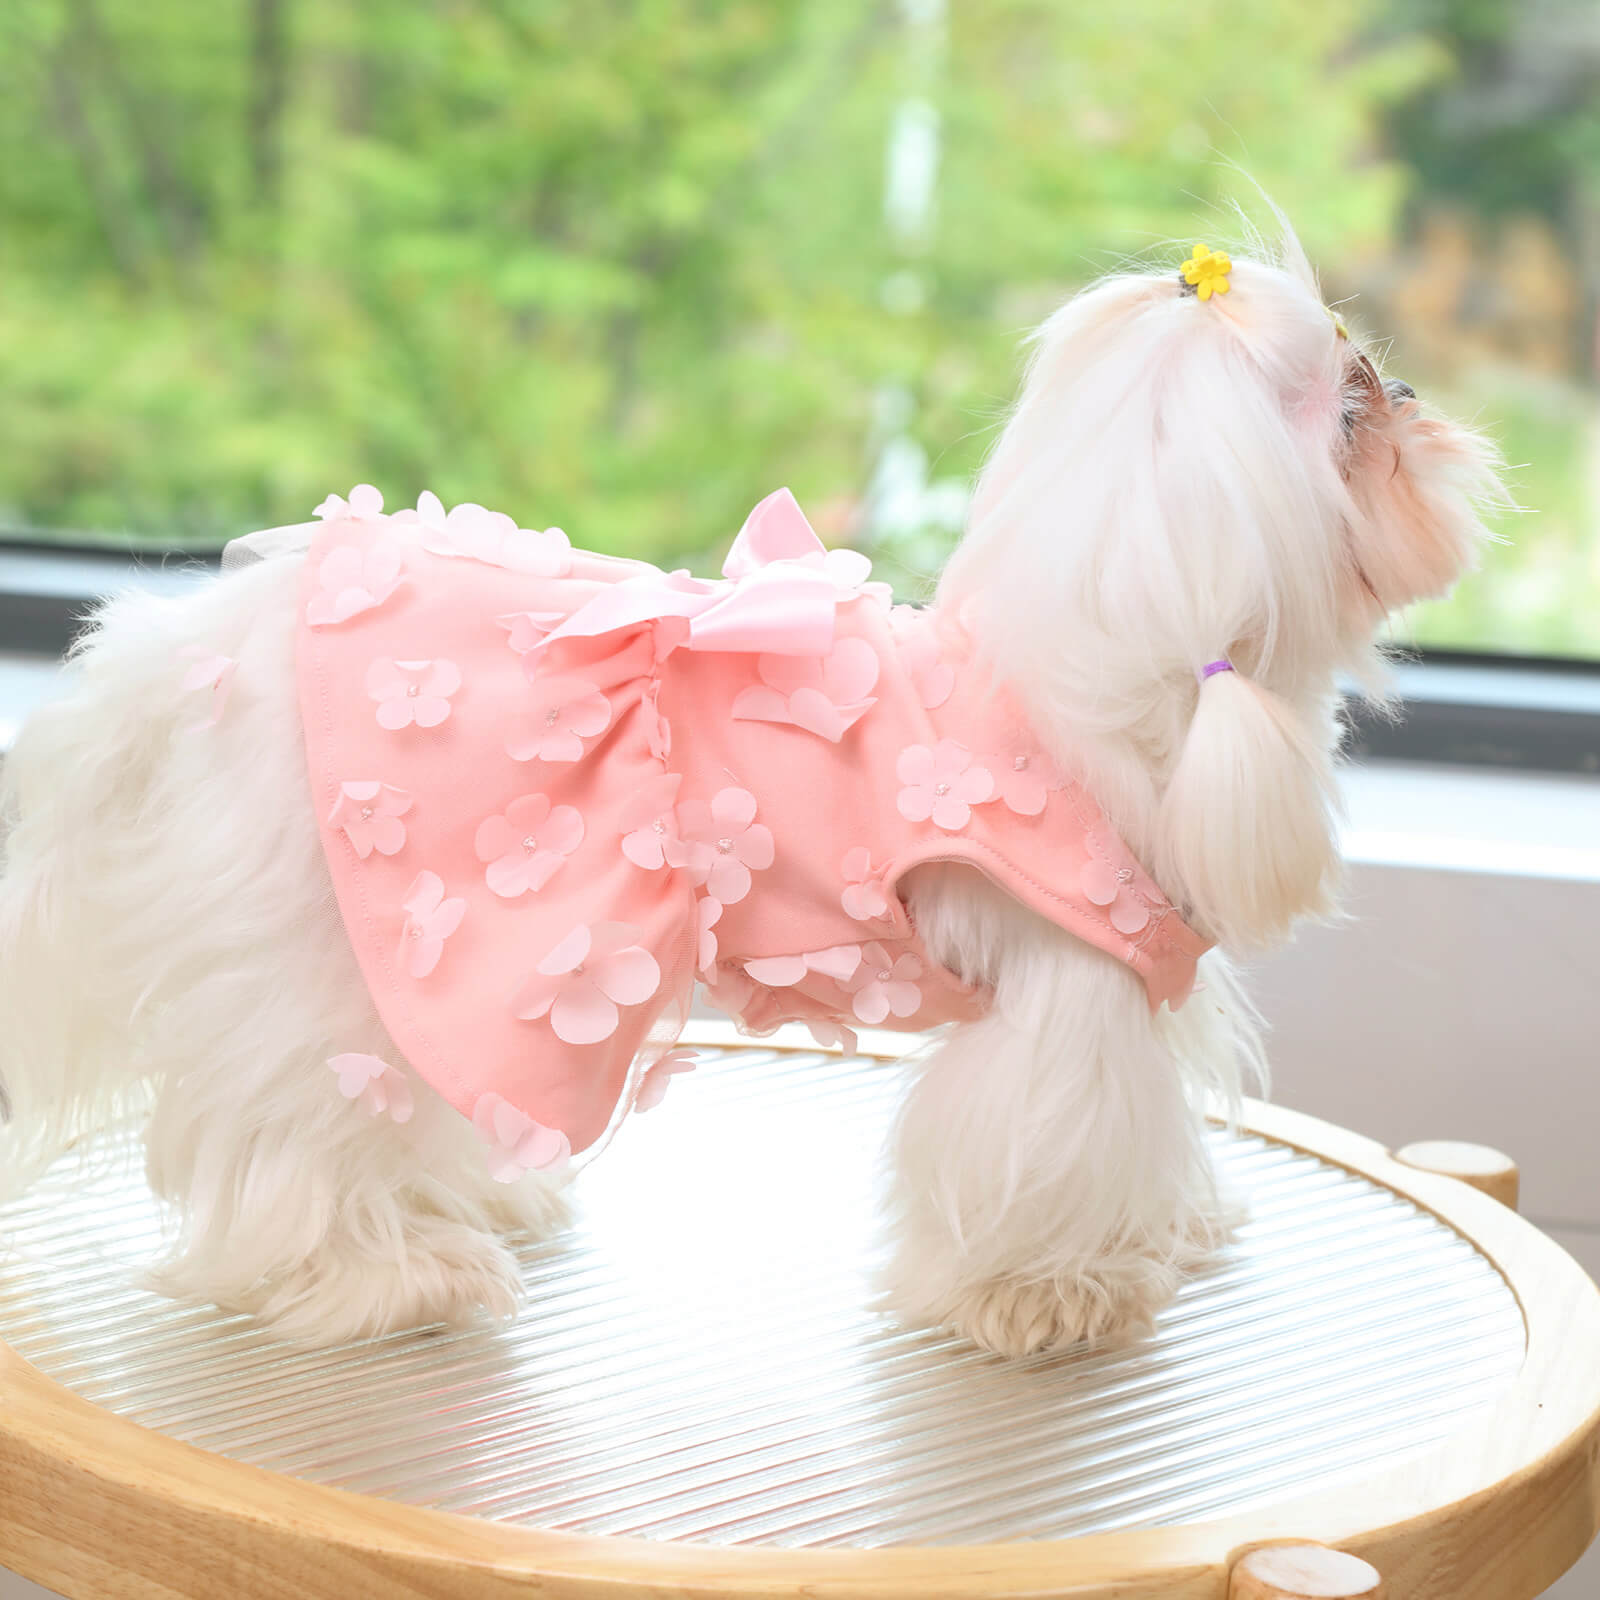 Laifug Draped Wedding Dog Dress With Flowers